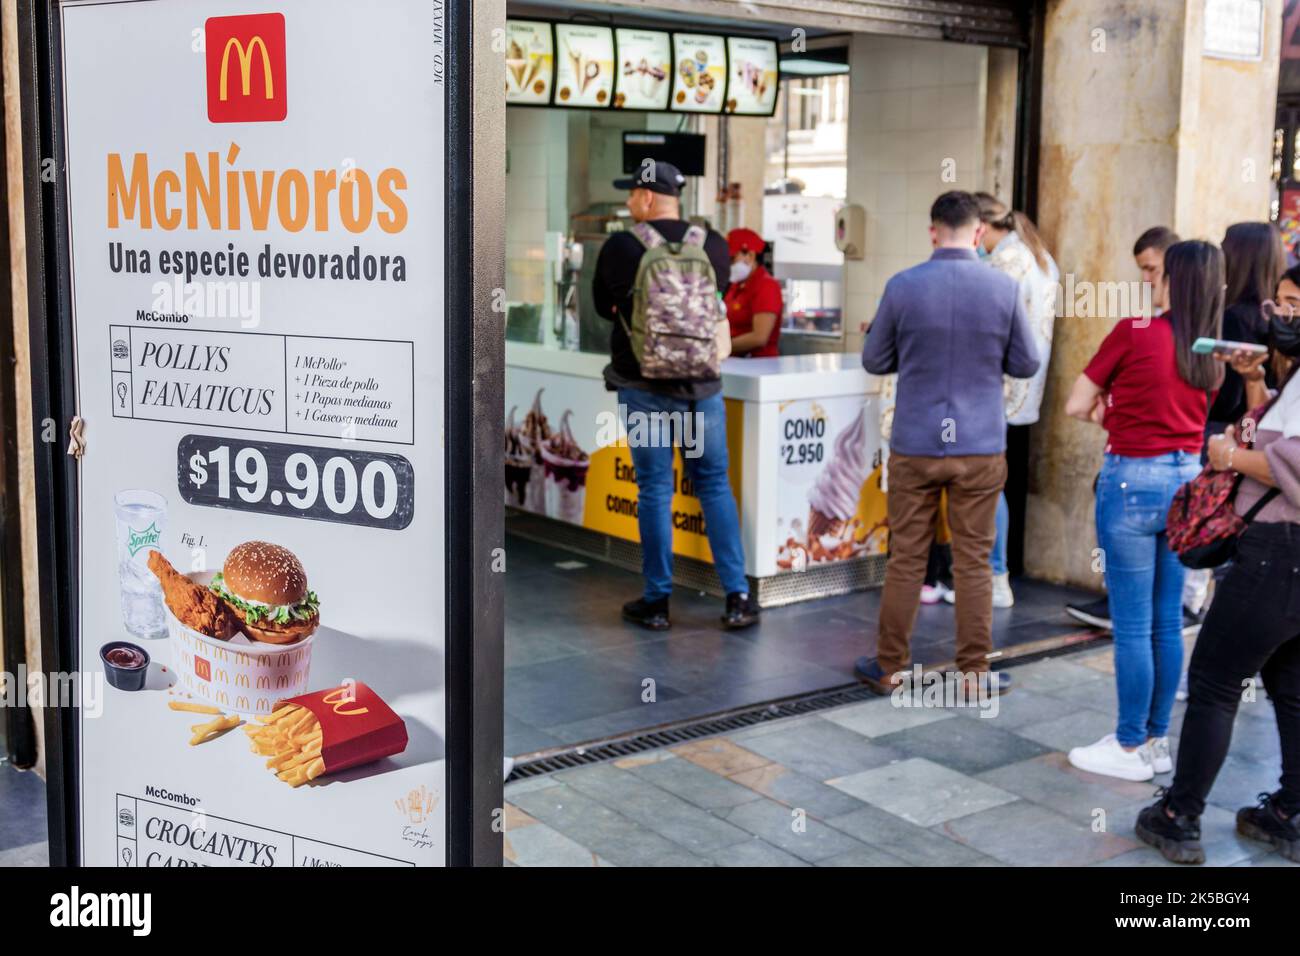 Bogota Colombia,Sante Fe Carrera 7 Avenida Jimenez McDonald's McNivoros play on words wordplay Spanish language pesos currency price,fast food restaur Stock Photo